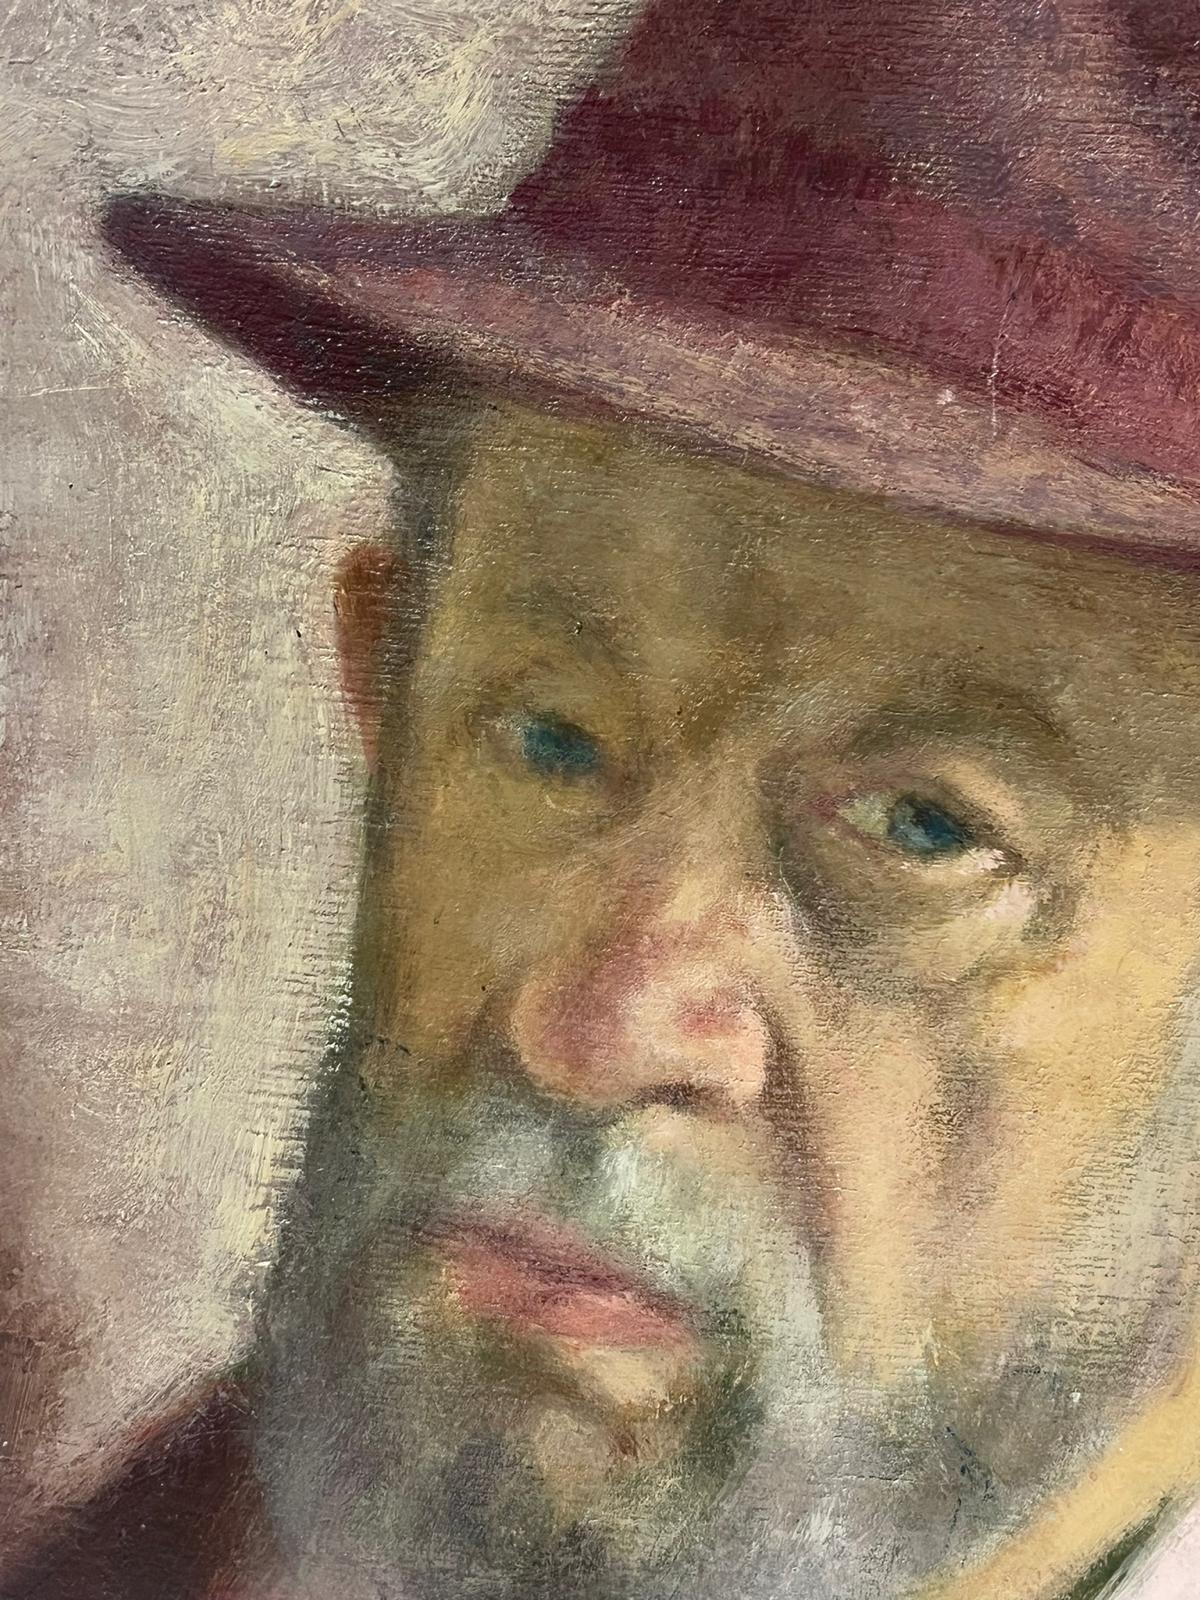 Mid 20th Century Portrait of Elderly Man with Beard Wearing Old Hat, oil paint - Modern Painting by Jacob Markiel